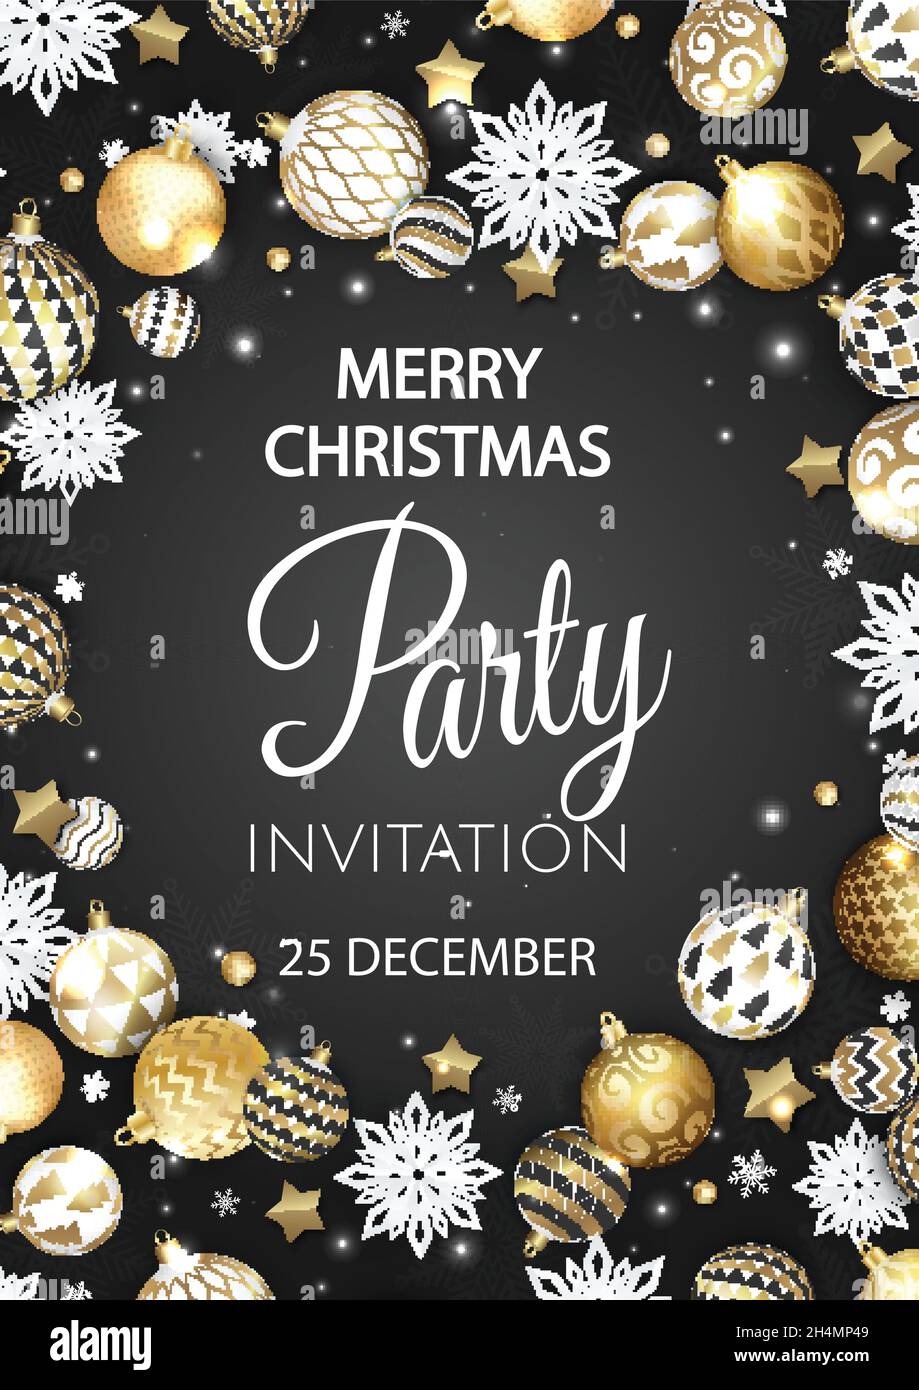 holiday invitation background